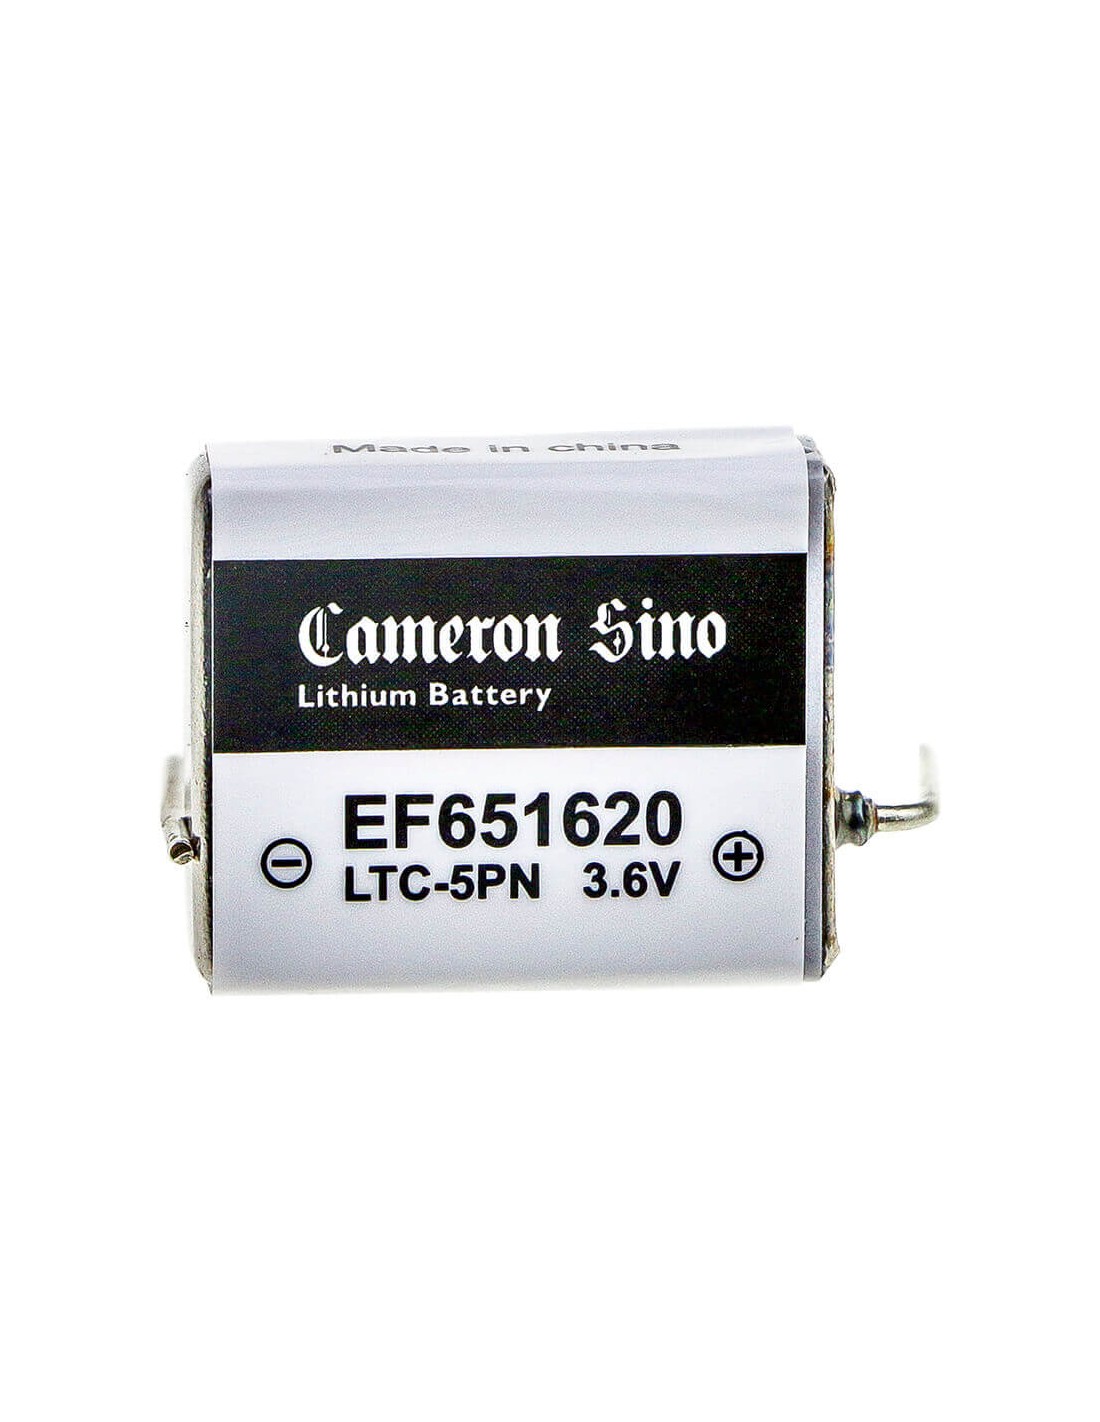 Battery for Cameron Sino, Ef651620 3.6V, 550mAh - 1.98Wh